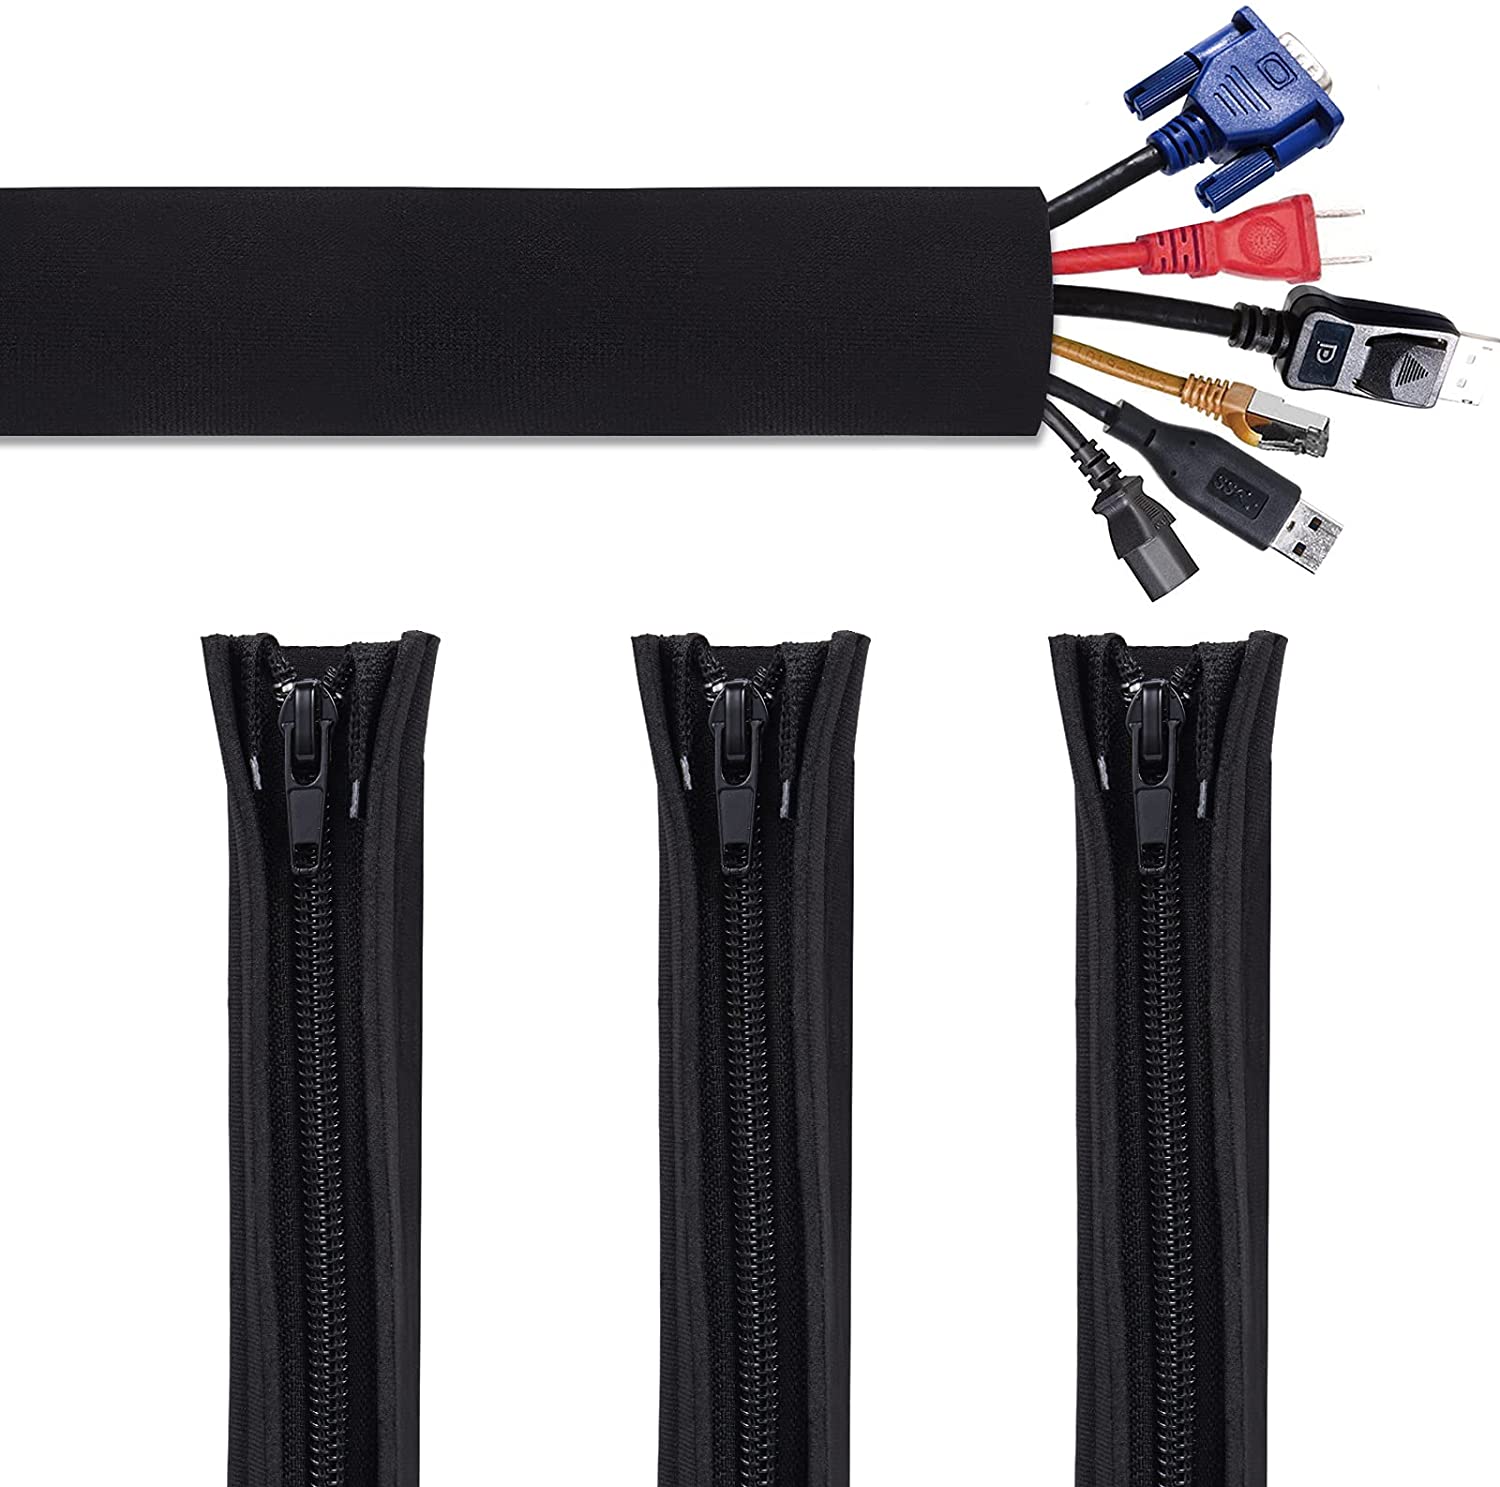 Bestfy DIY Customizable Cable Zipper Sleeve, 4-Pack